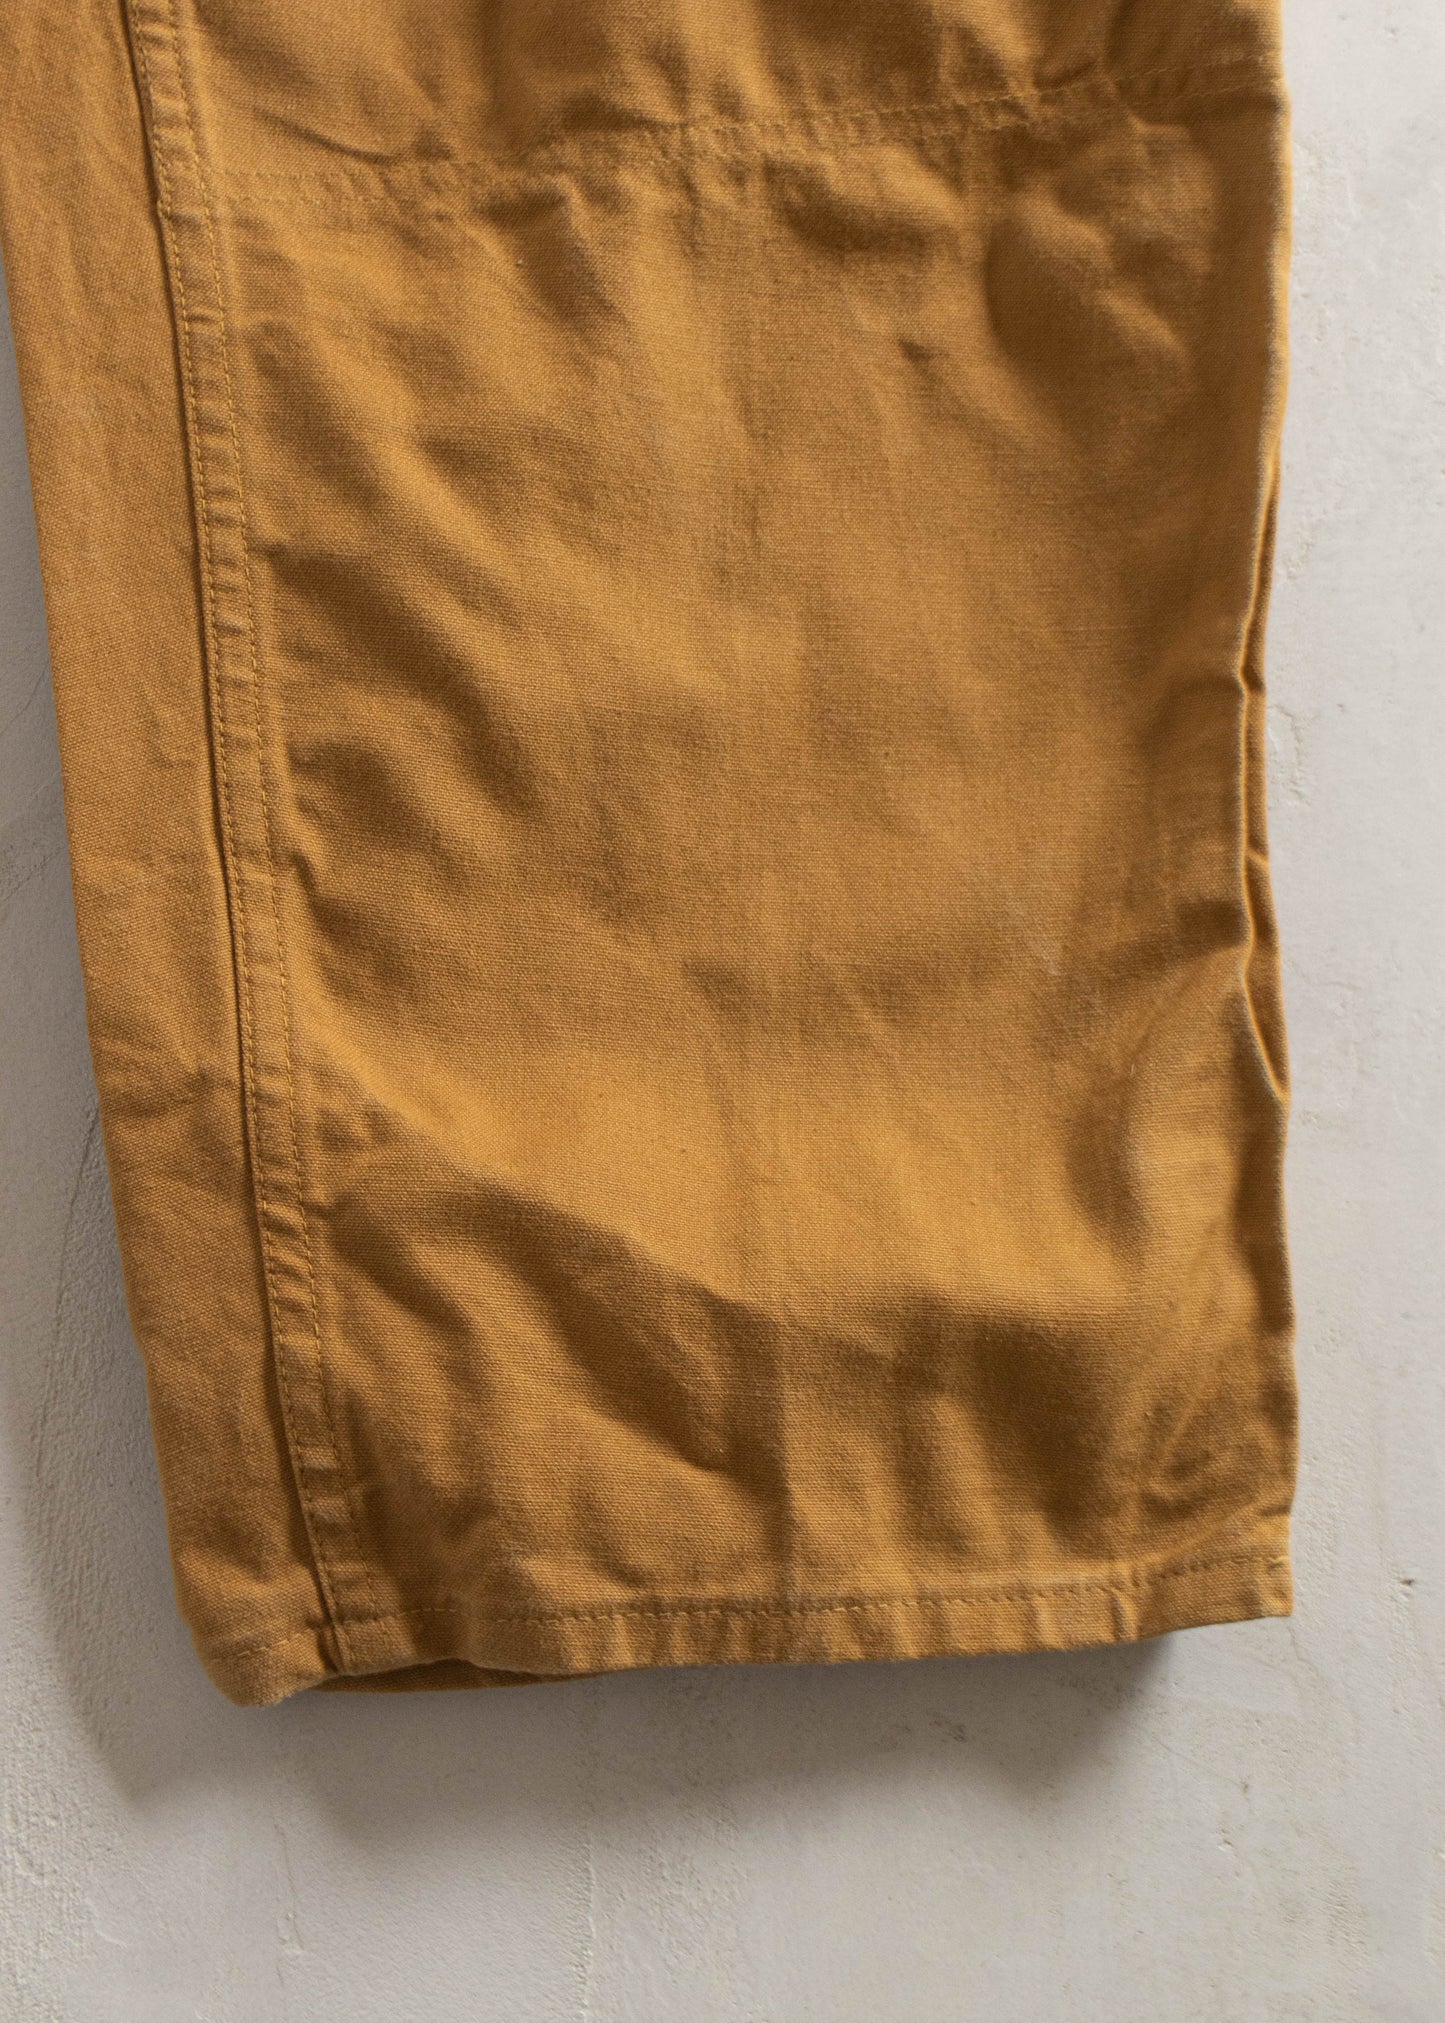 Vintage 1970s Drybak Hunting Pants Size Women's 36 Men's 38